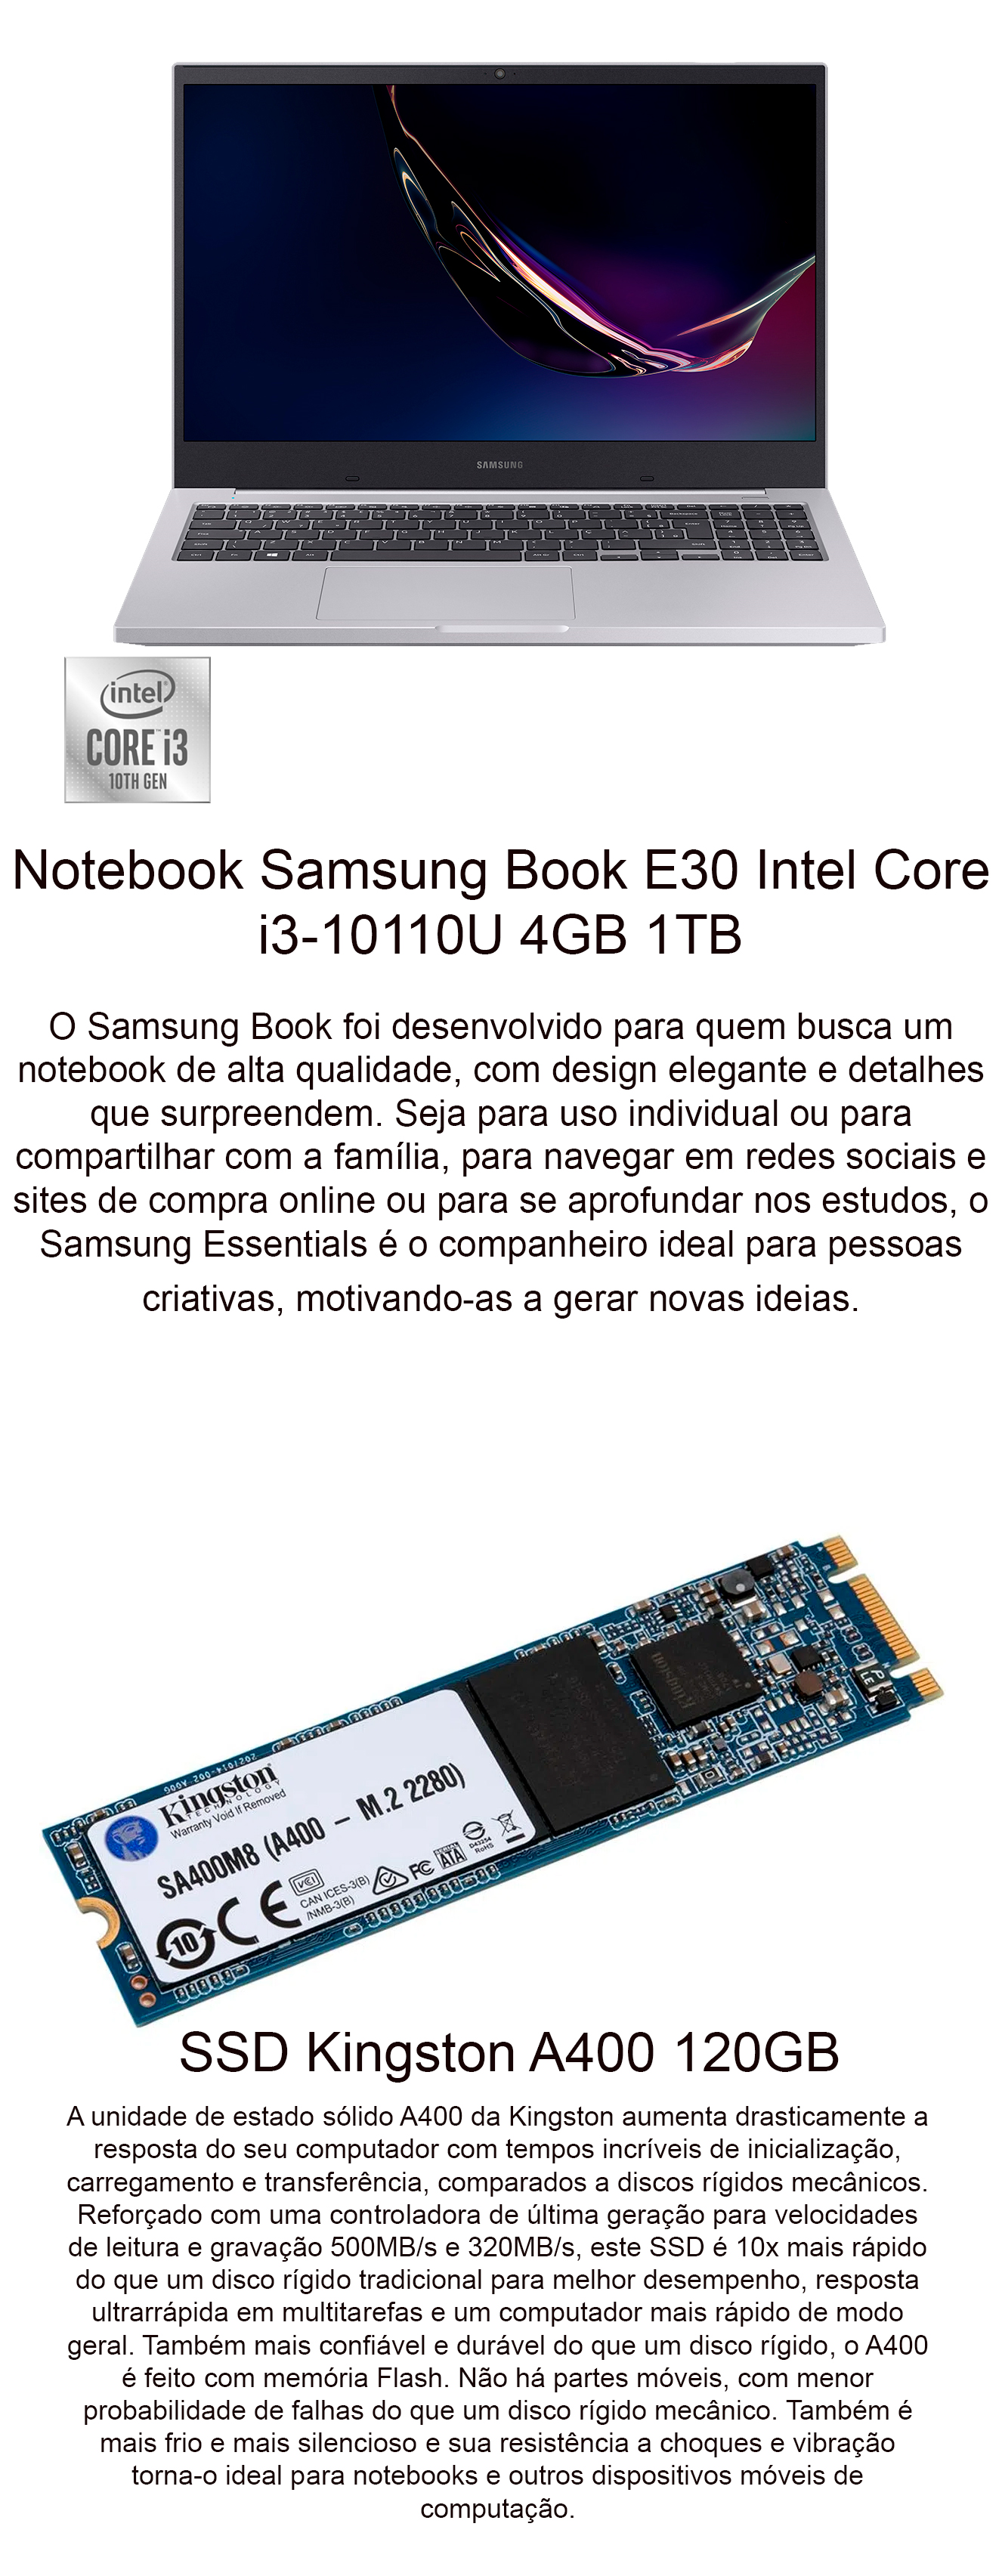 Notebook Samsung Book E30 Intel Core i3-10110U 4GB 1TB + 120GB SSD (adicionado) 15,6